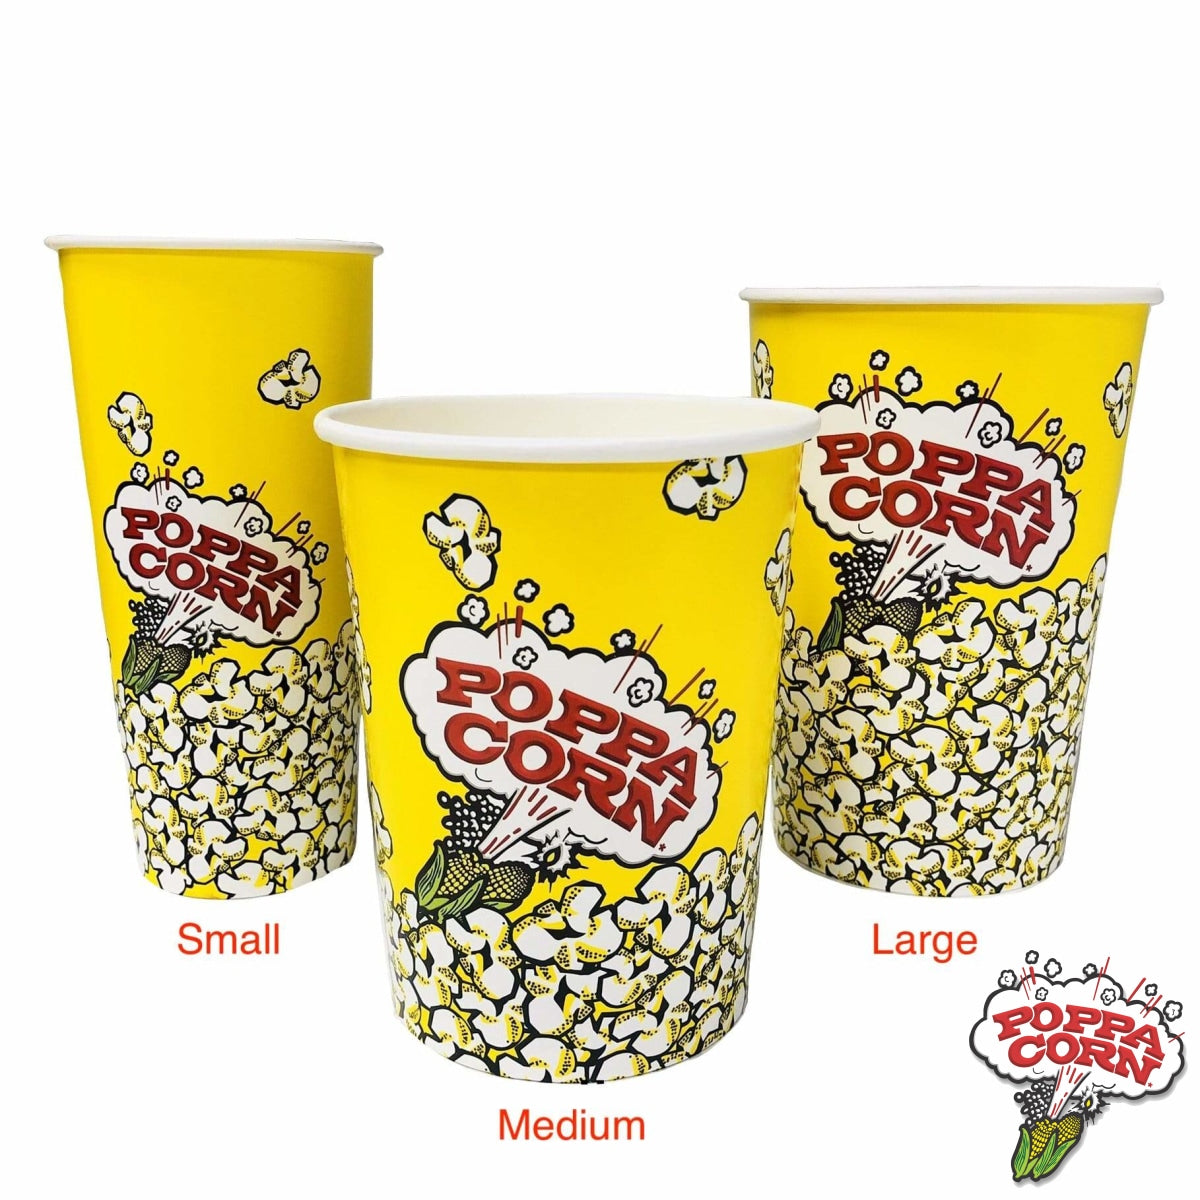 CUP046 - Rolled Rim Popcorn Cups - Large 46 oz - 500/Case - Poppa Corn Corp